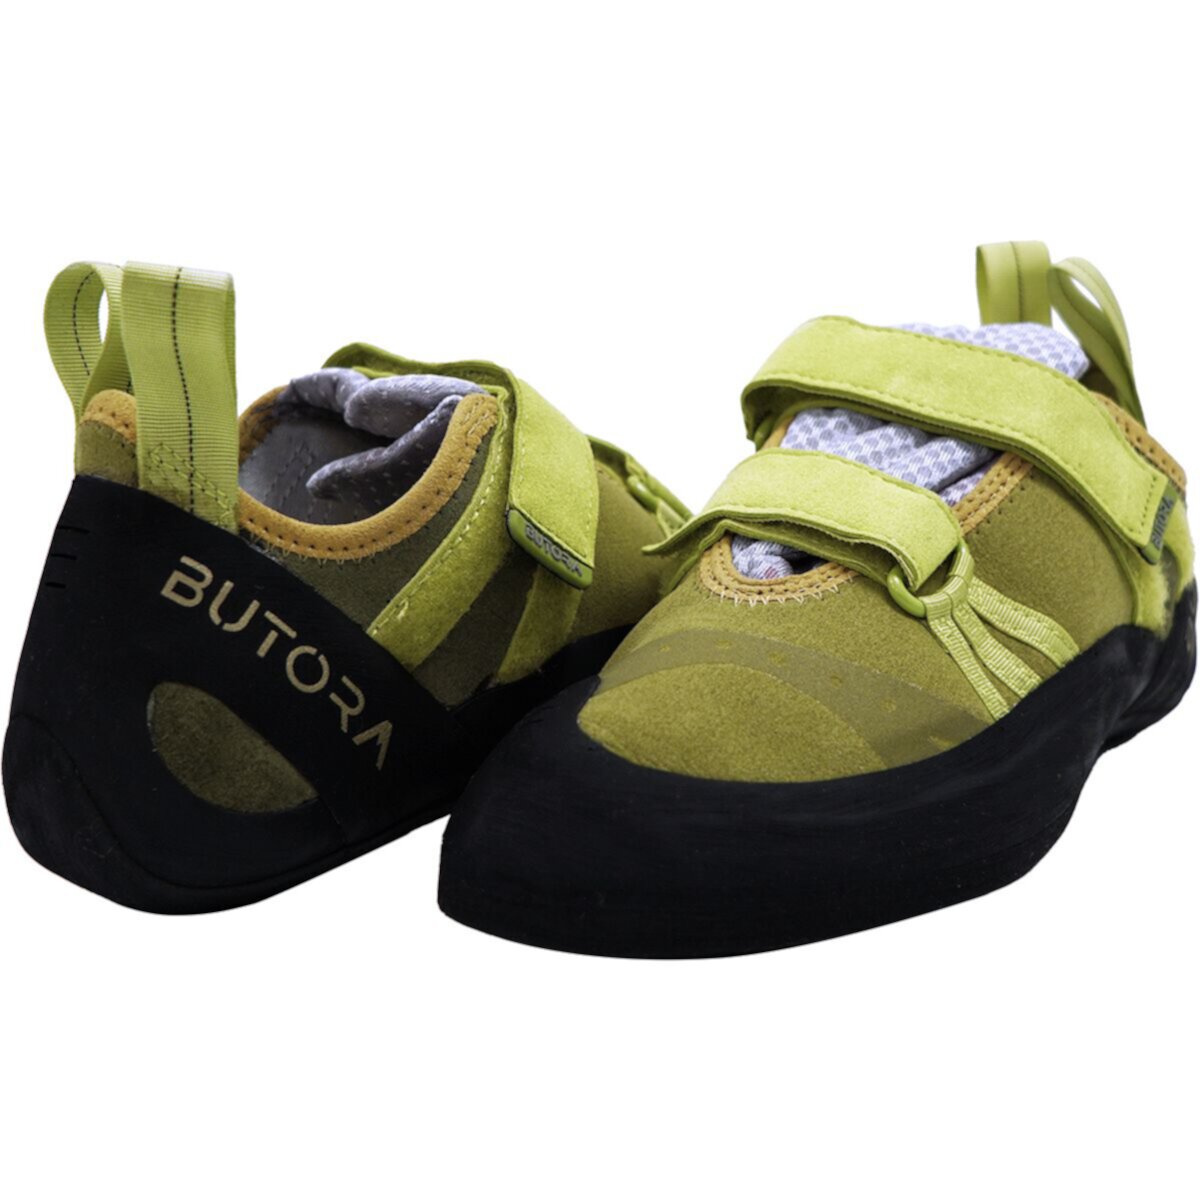 Ботинки для скалолазания Butora Endeavour Wide Fit Butora